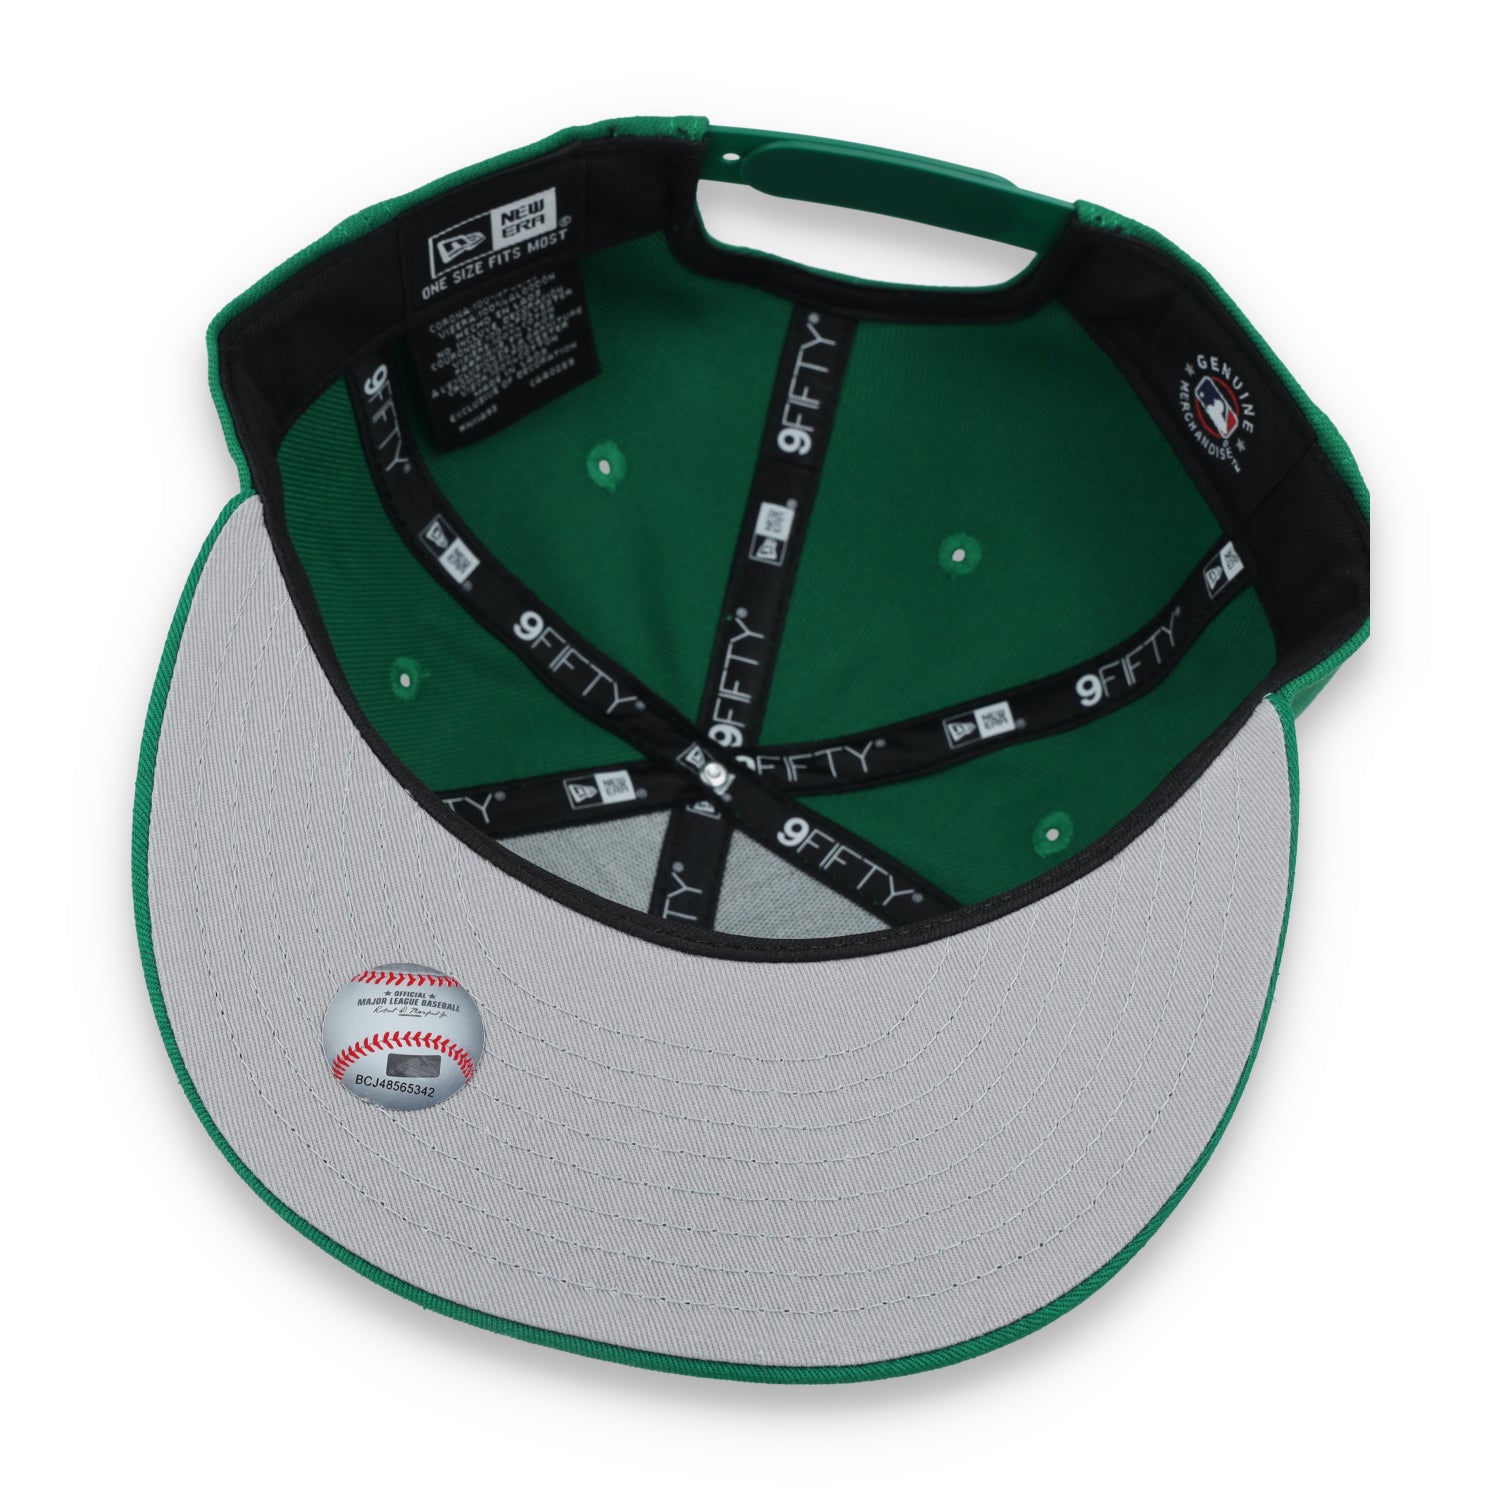 New Era  Oakland Athletics On Field Alternative 9FIFTY Snapback  Hat